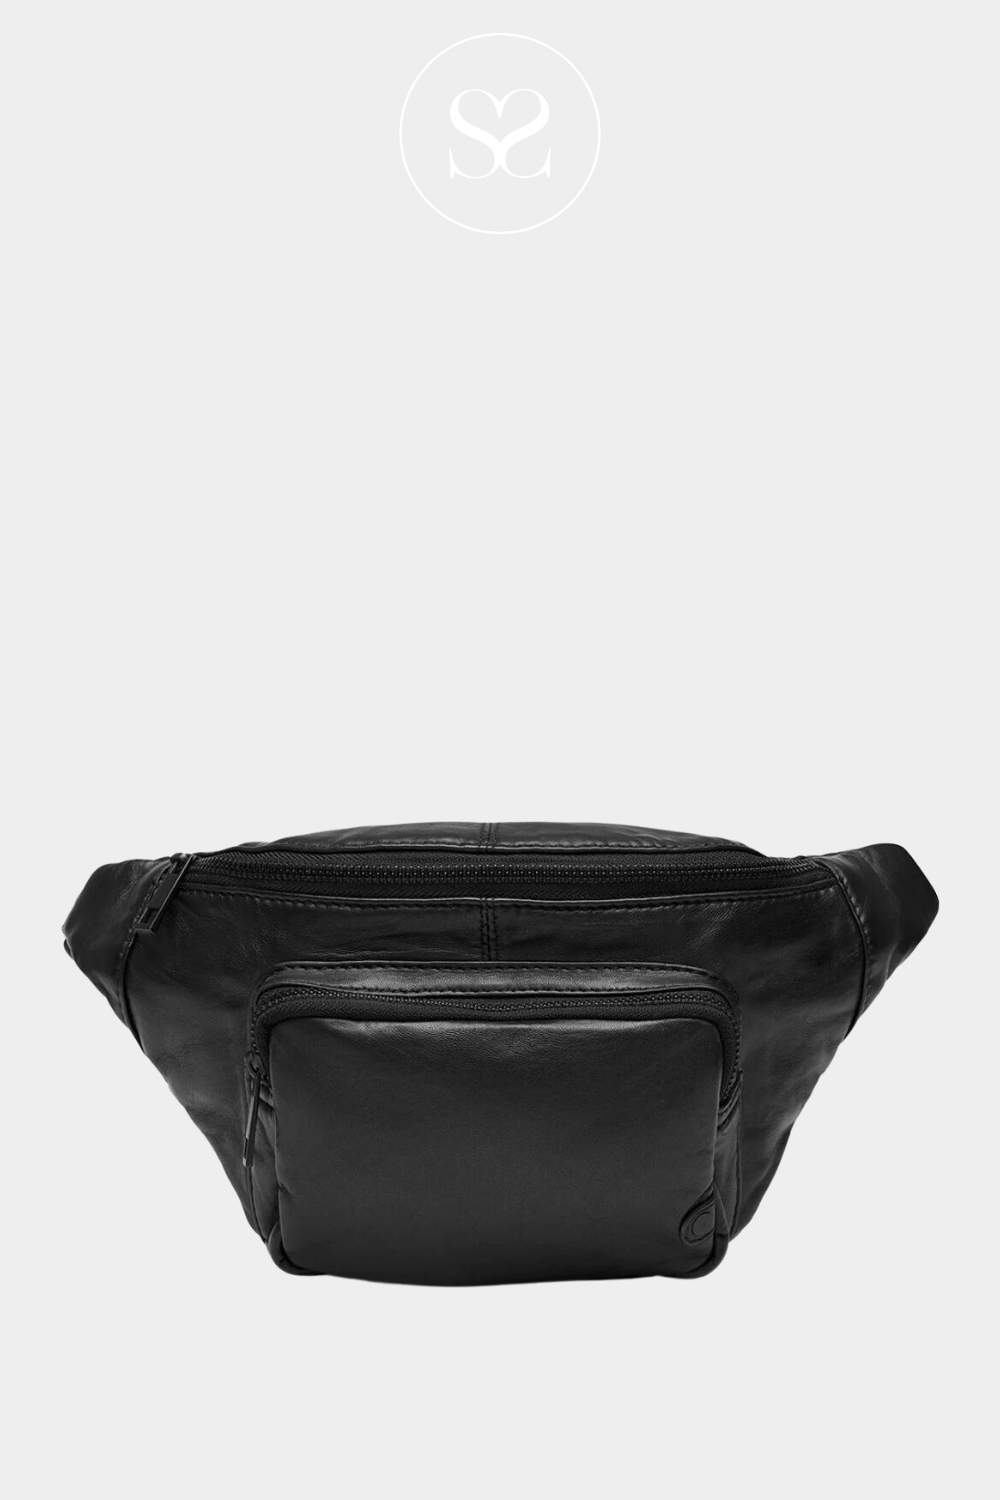 Black leather crossbody bum bag from Depeche